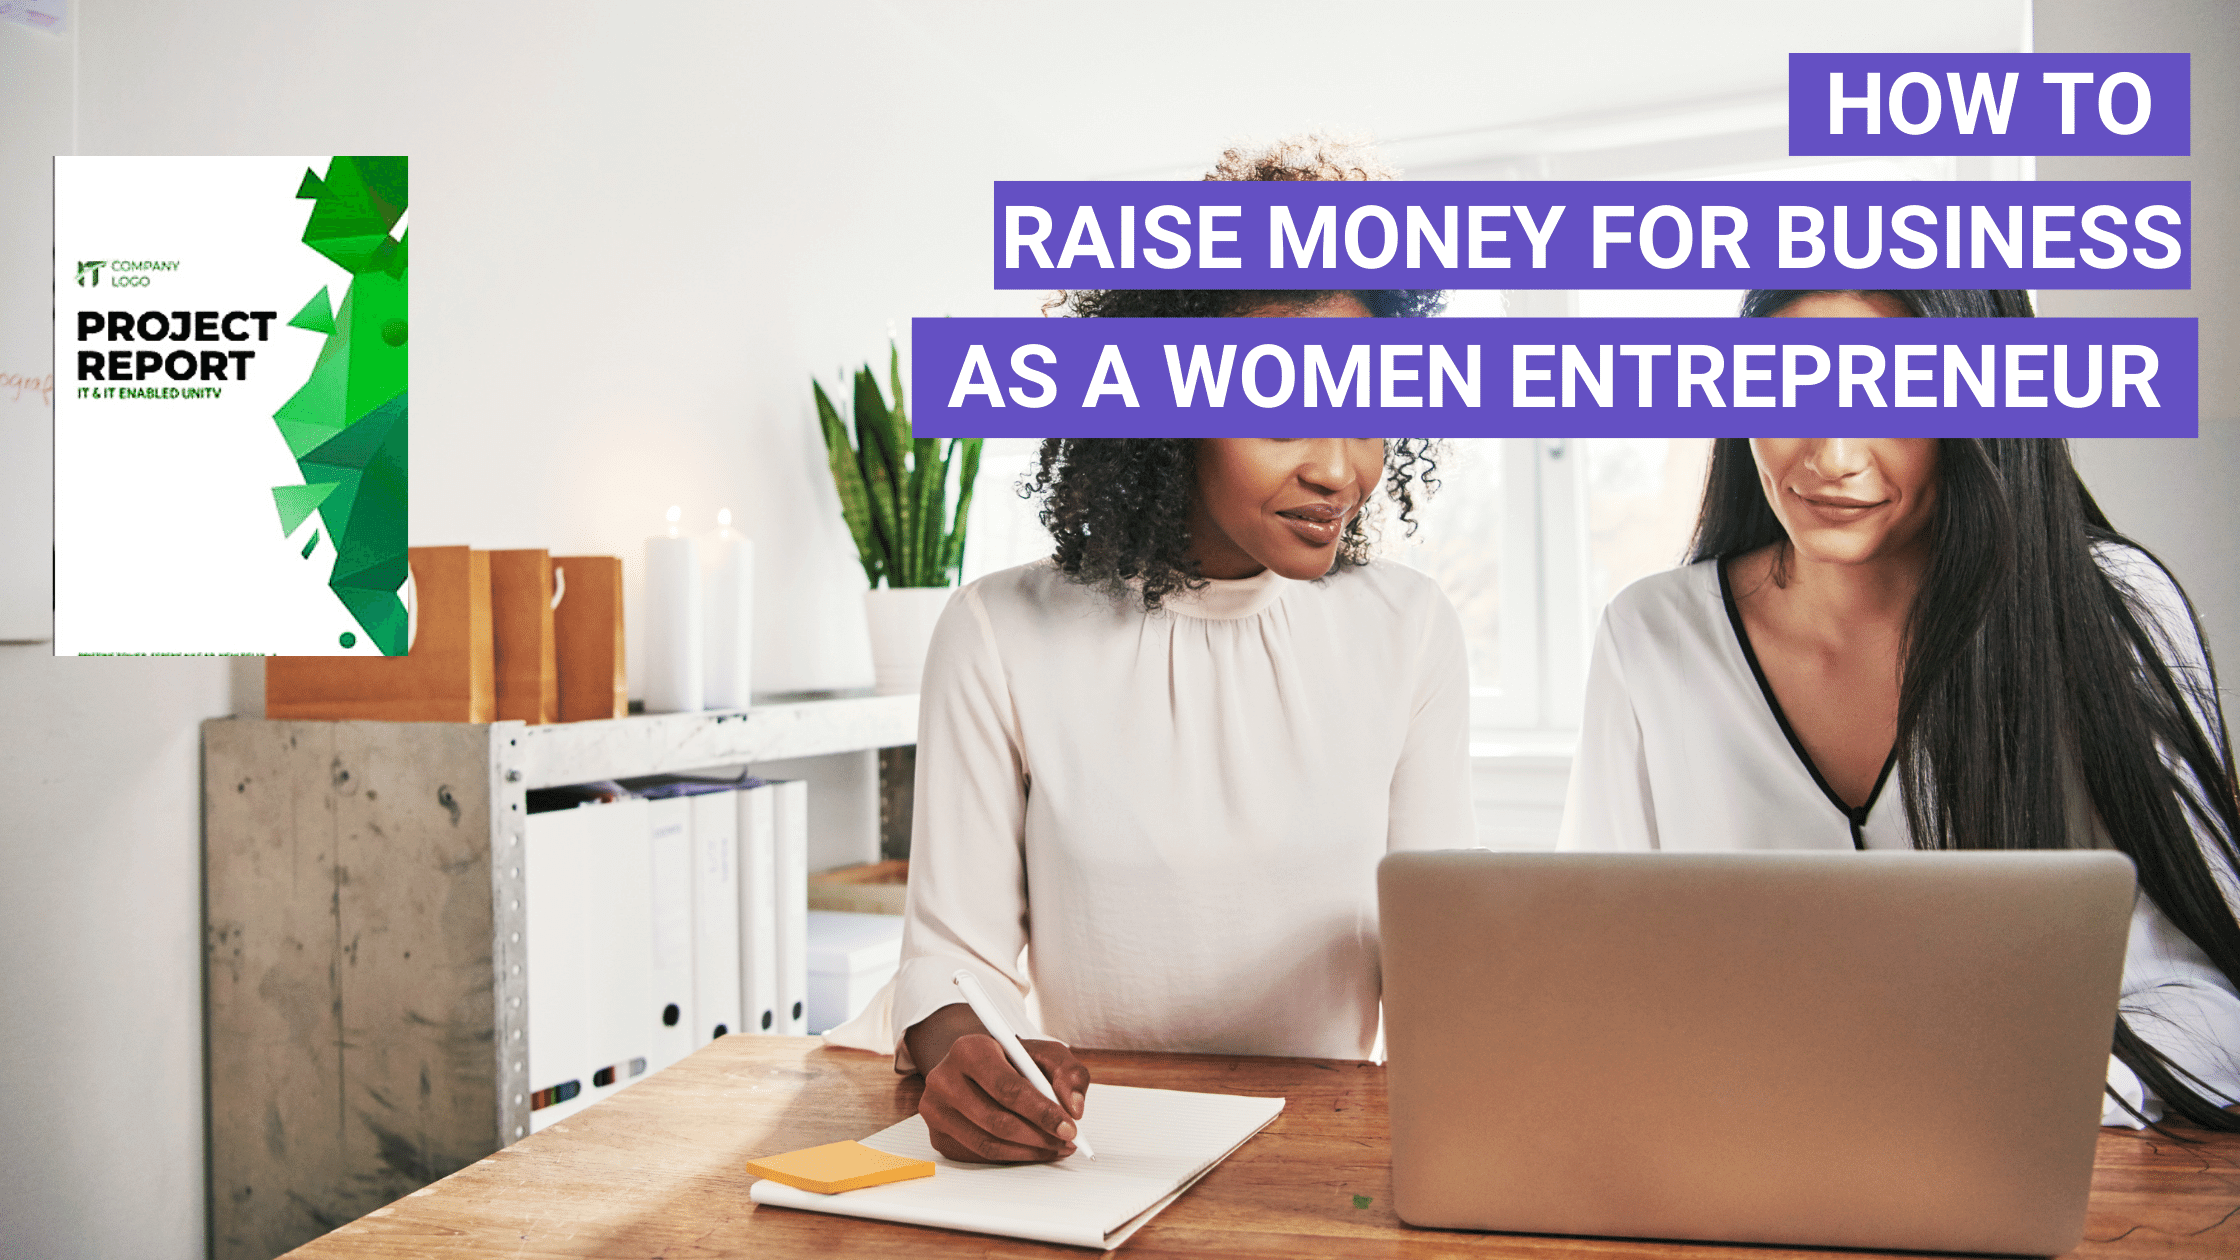 Raise money for business as a women entrepreneur